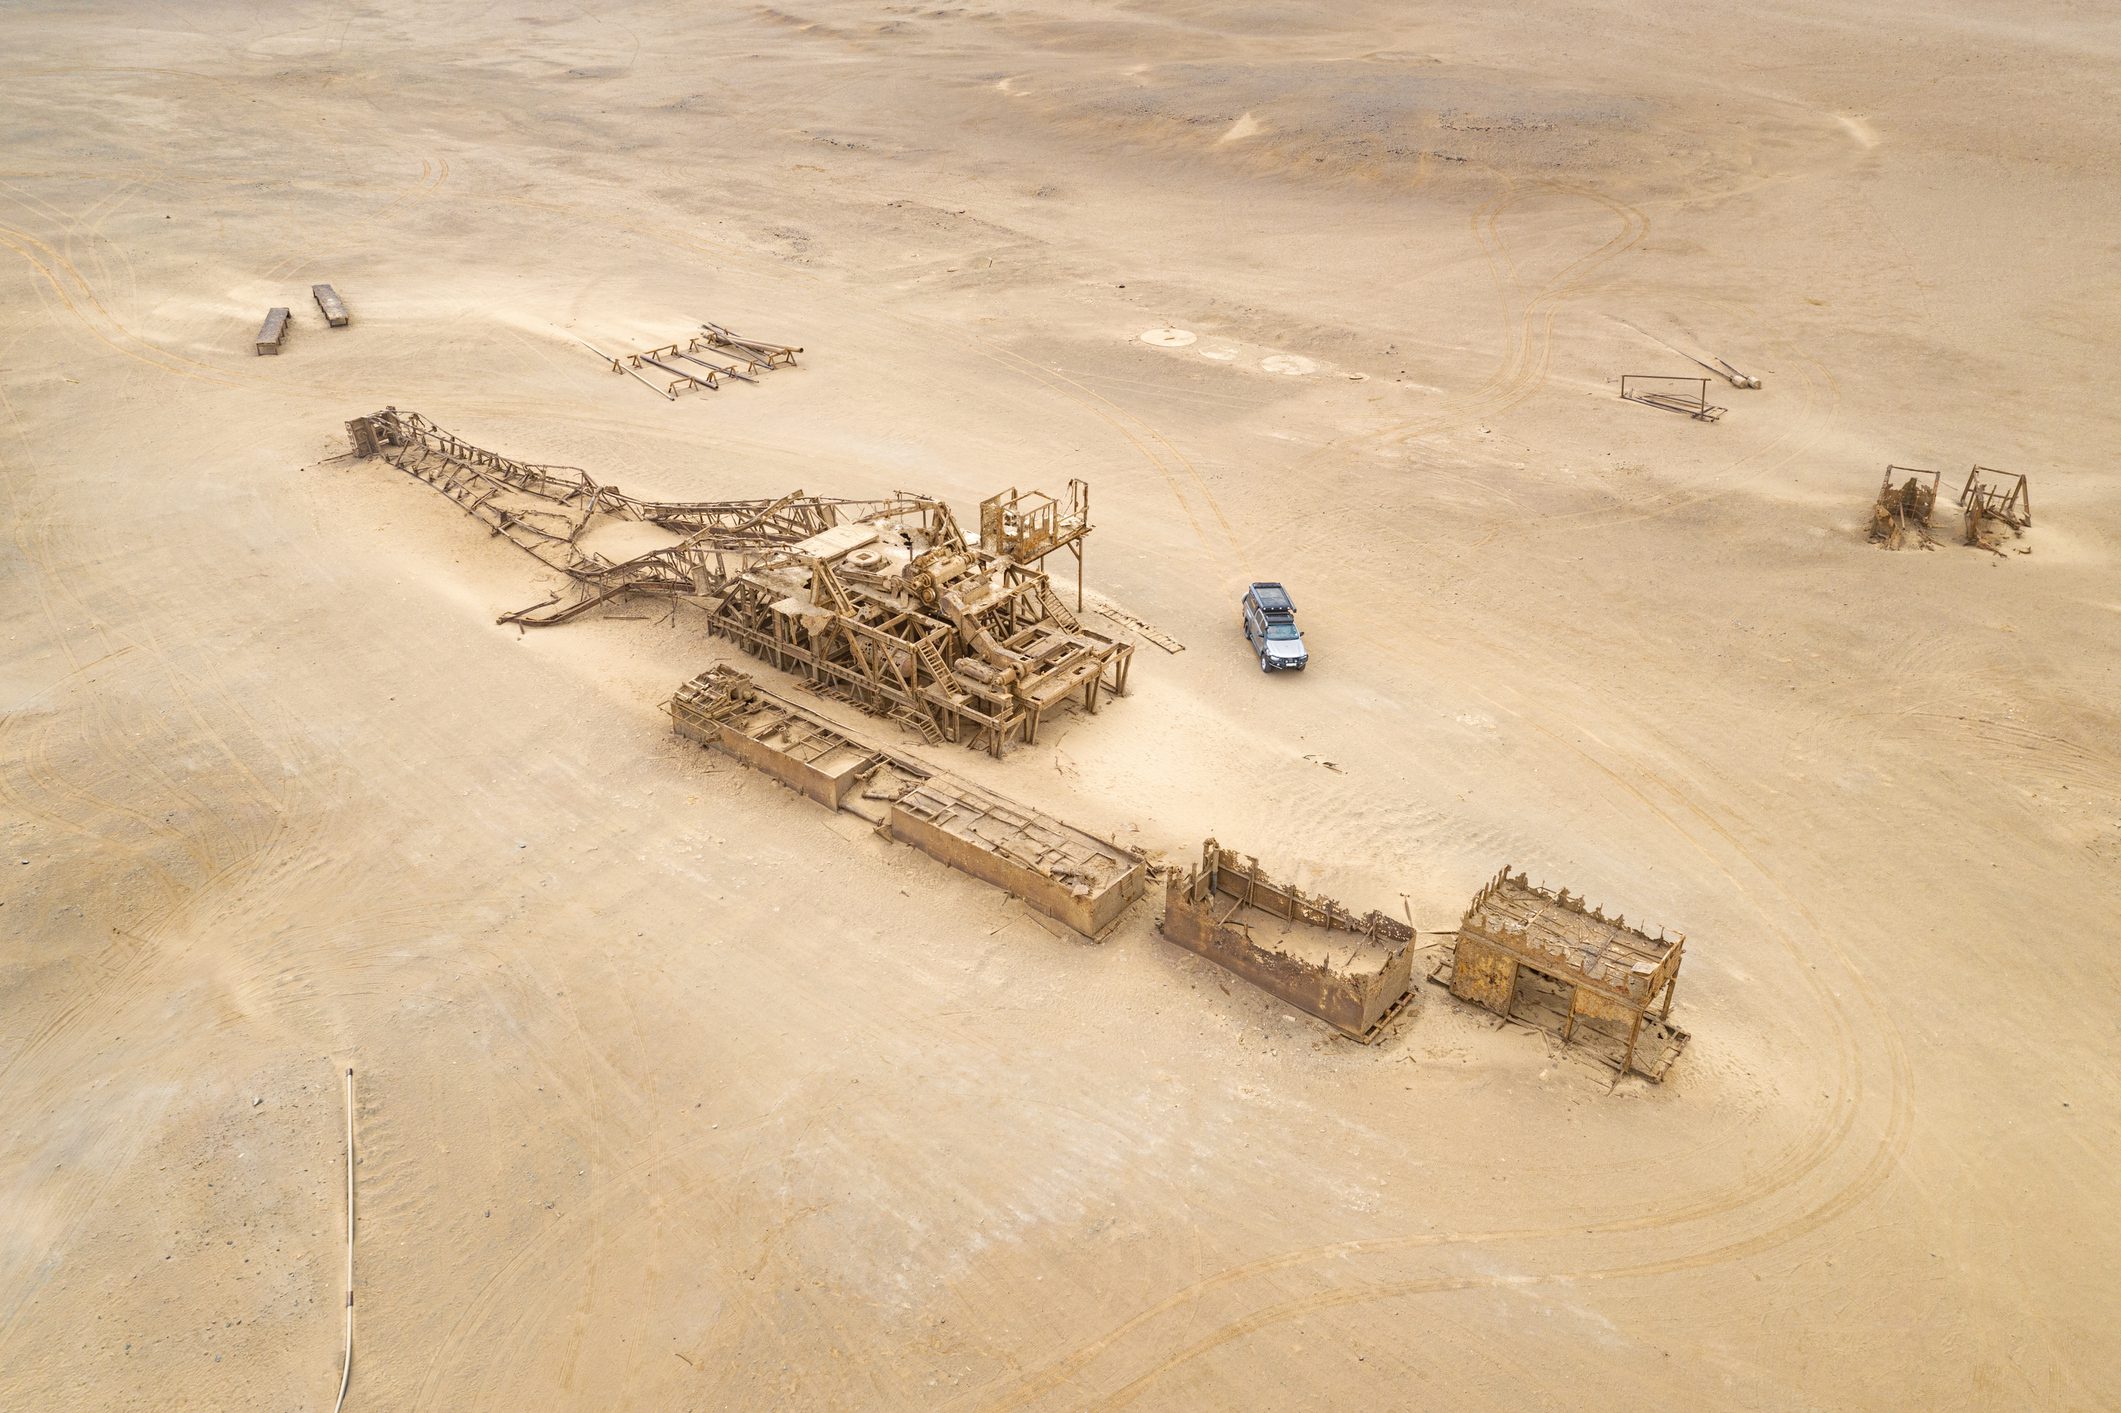 Oil Drill Tower Rig, Skeleton Coast, Namibia